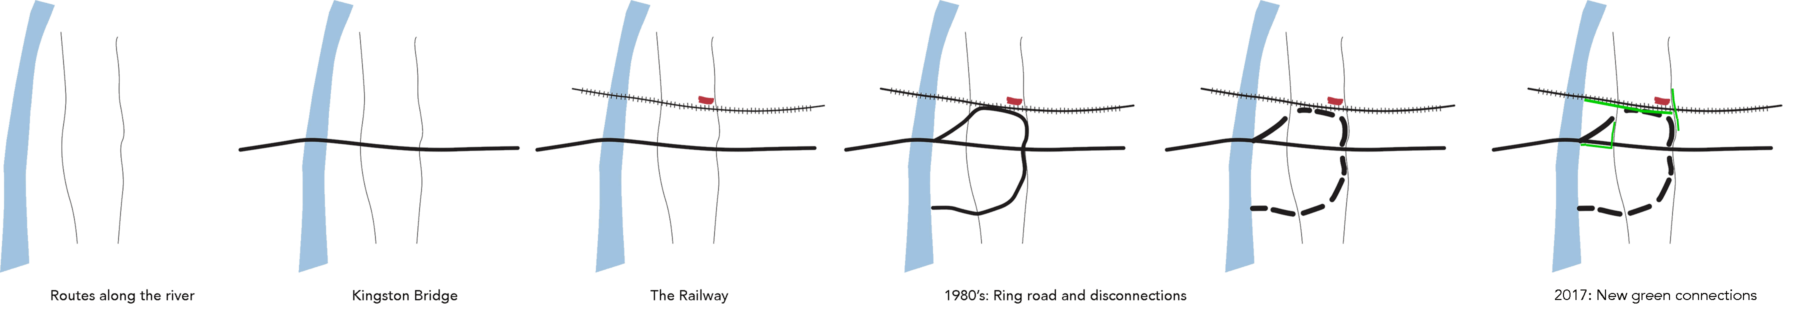 Sarah-Wigglesworth-Architects Kingston-Mini-Holland Context Transport-Patterns2 3600